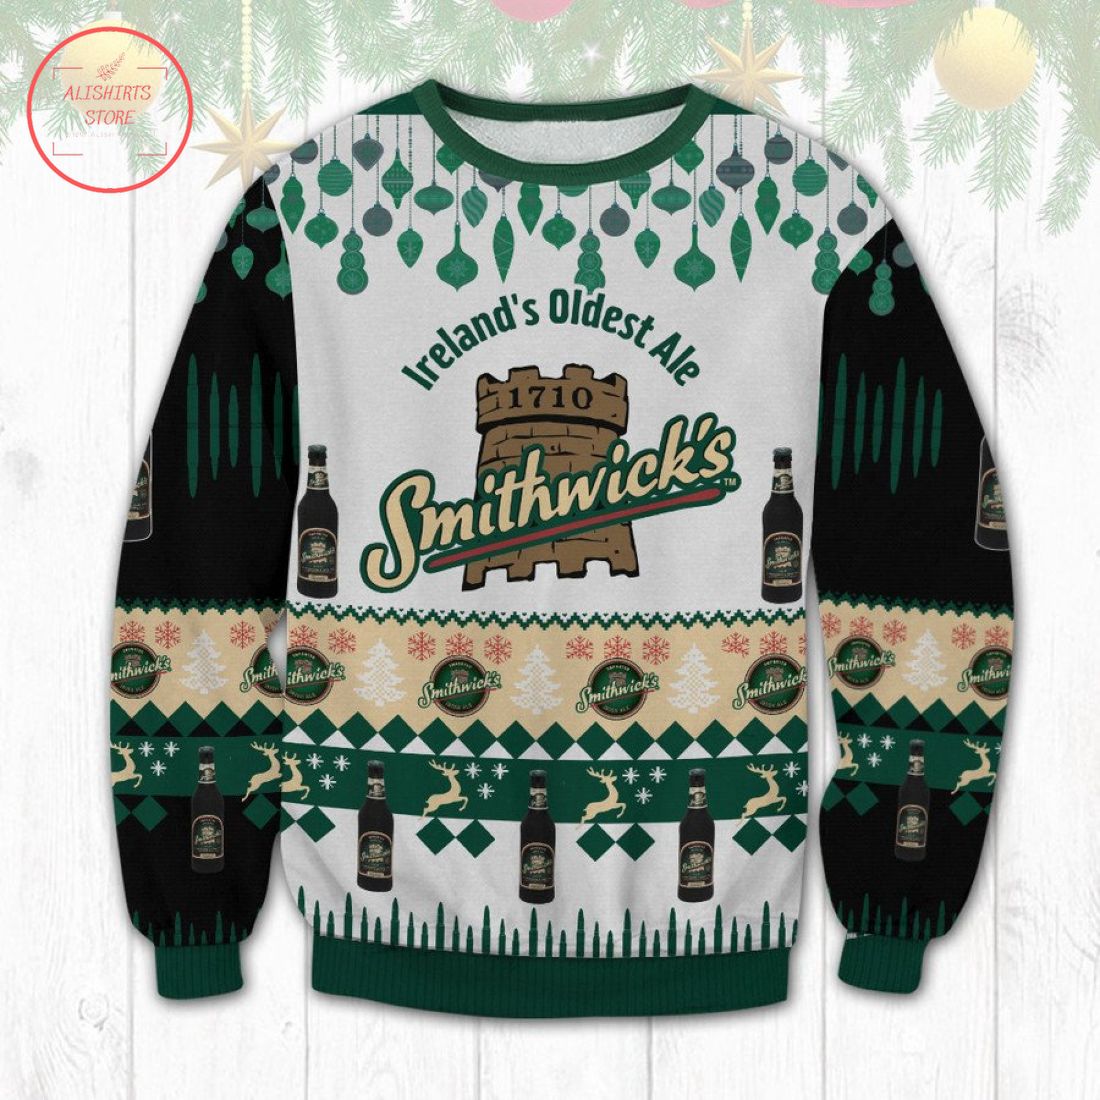 Smithwicks Irish Ale Ugly Christmas Sweater